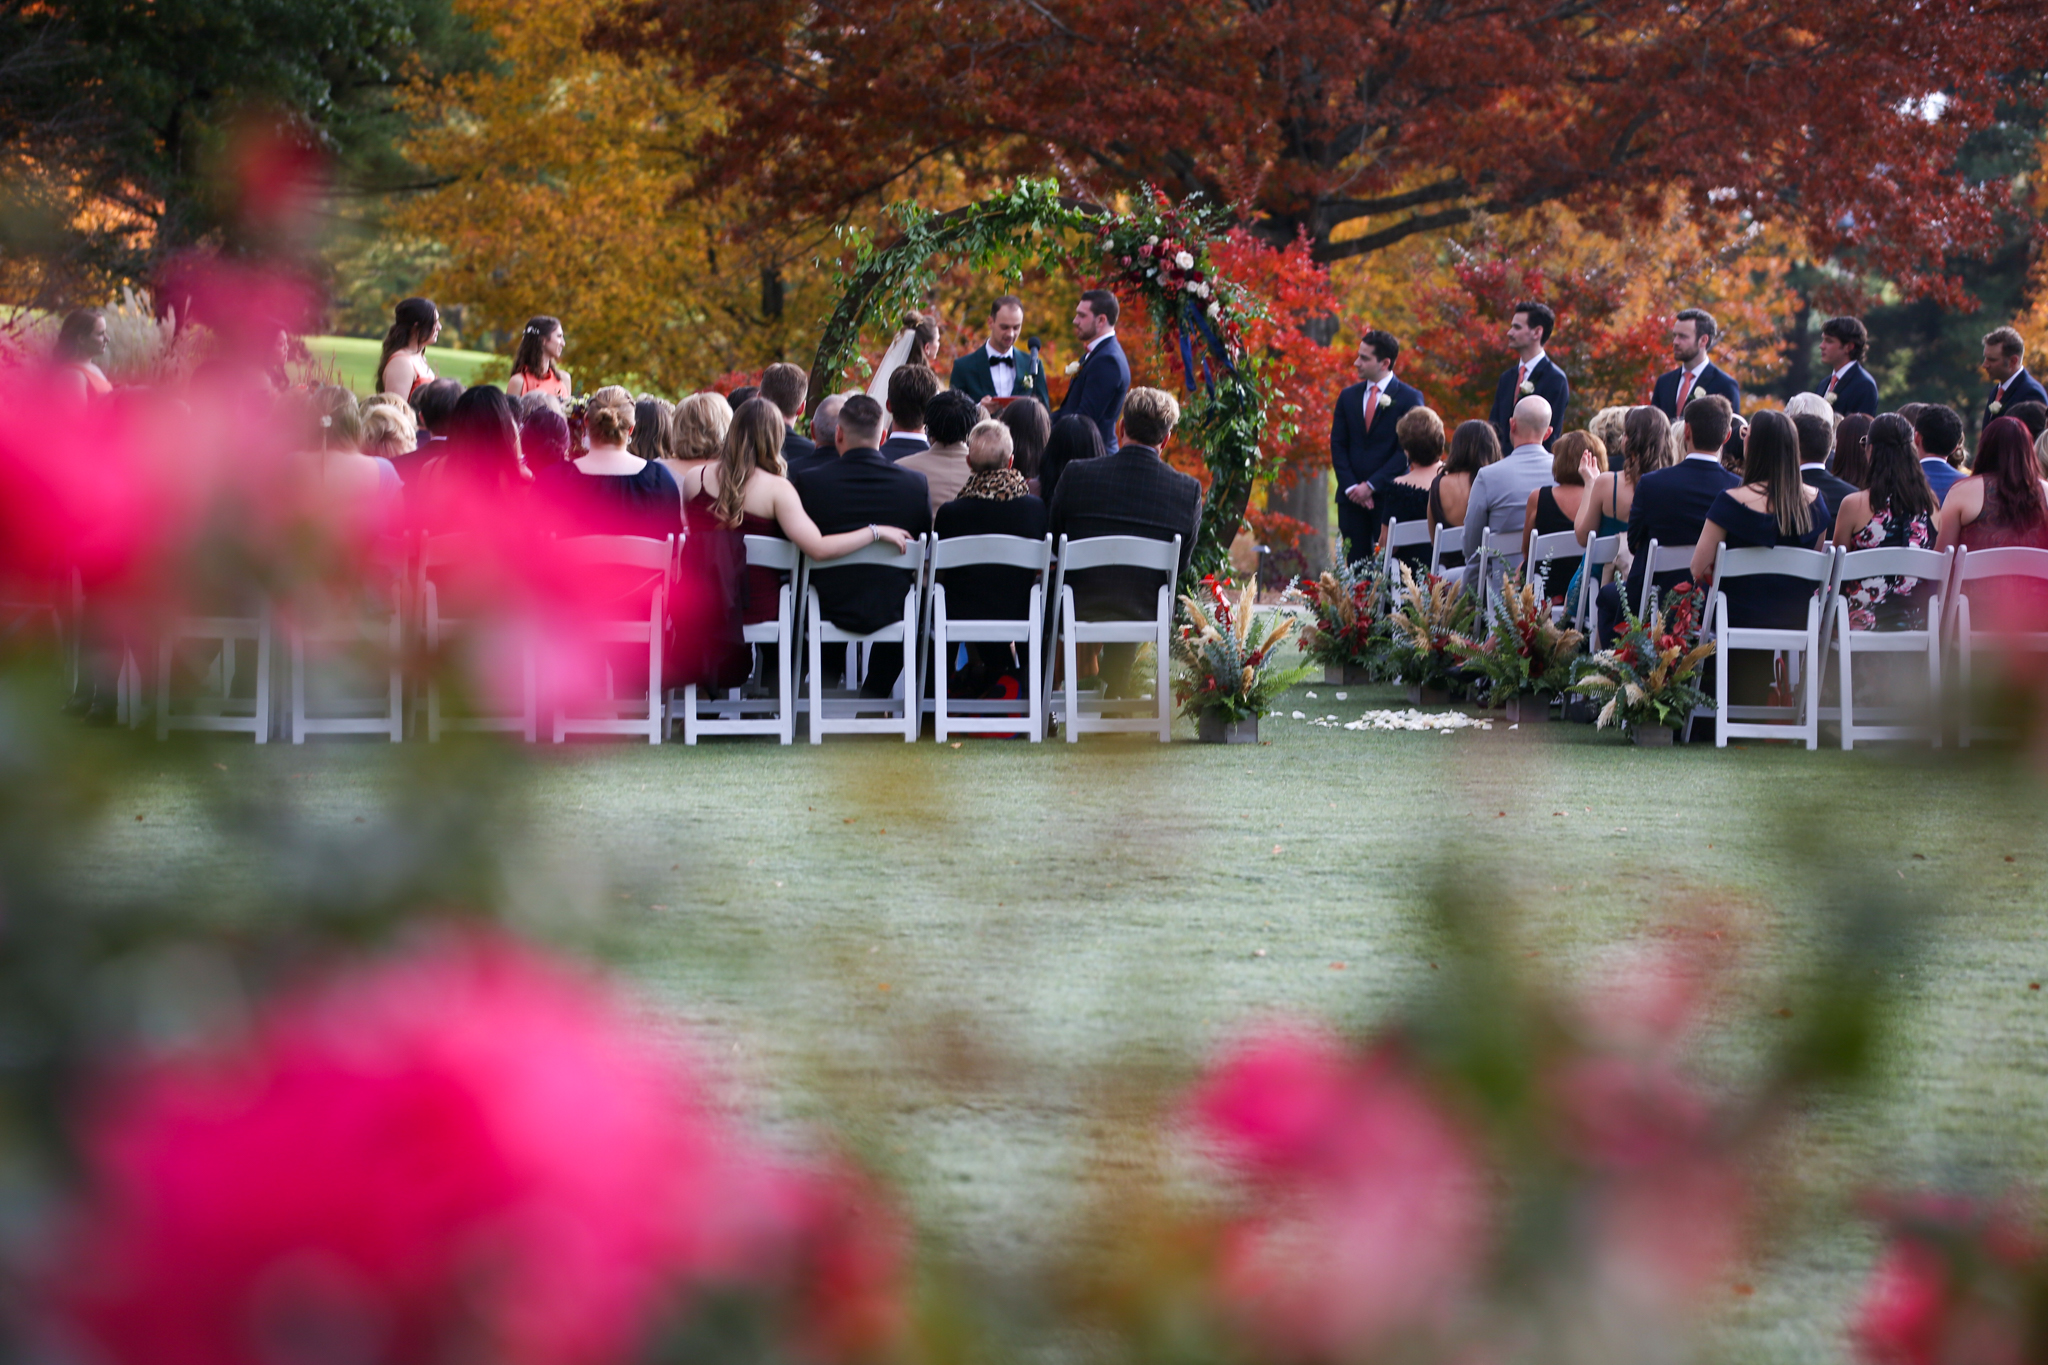 The Grove Park Inn lawn is a gorgeous spot for a Wedding event.